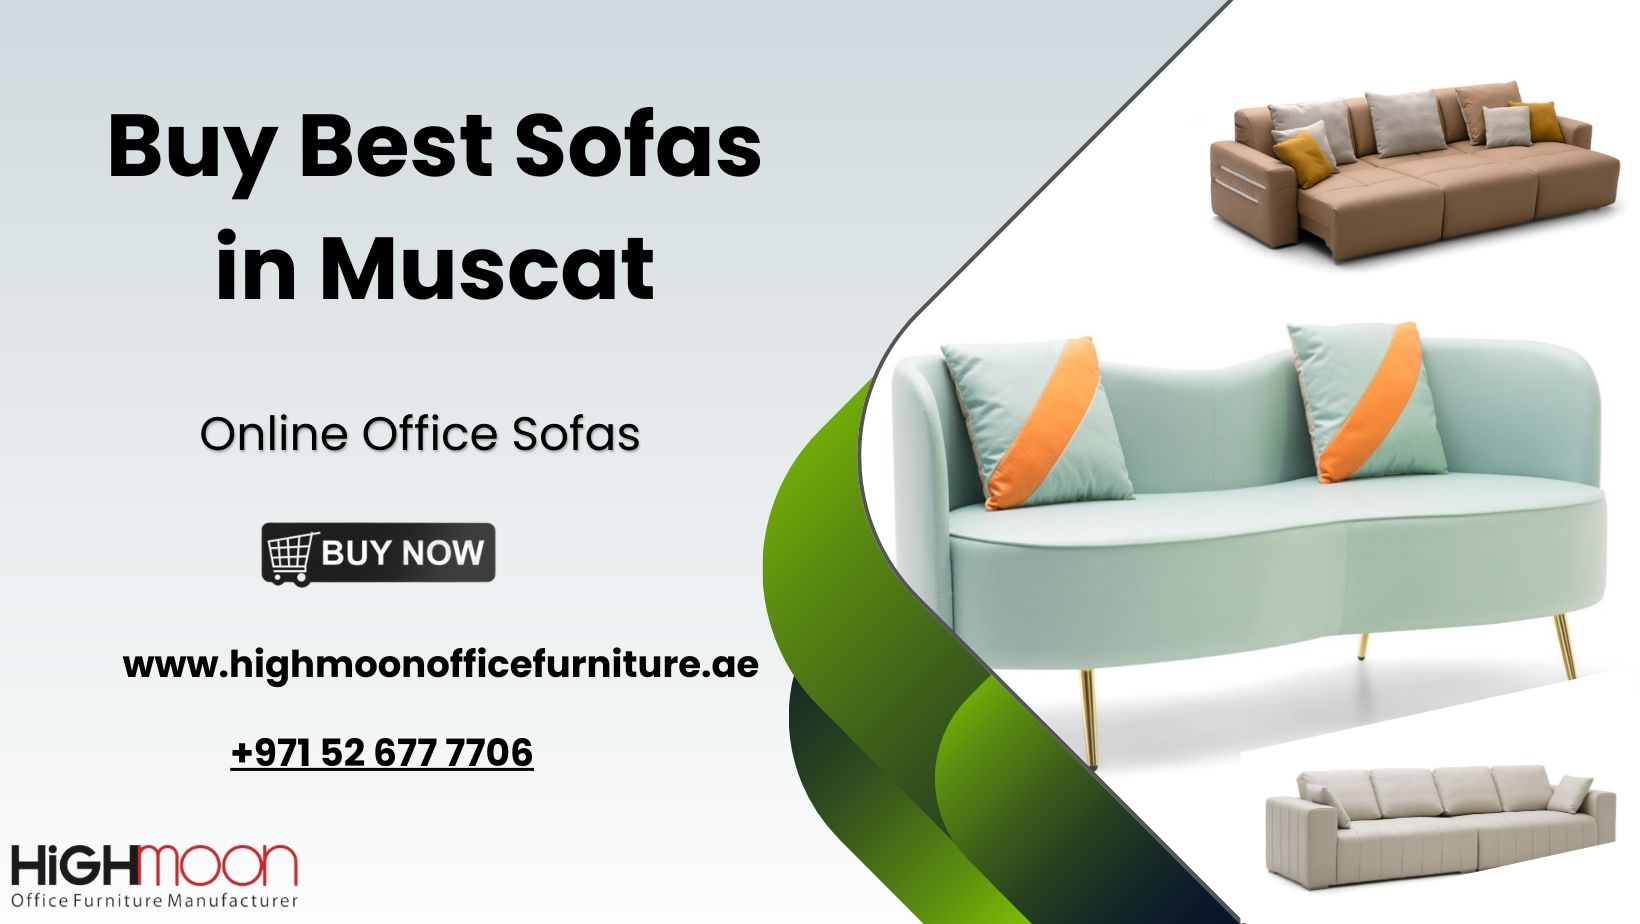 Buy Best Sofas in Muscat